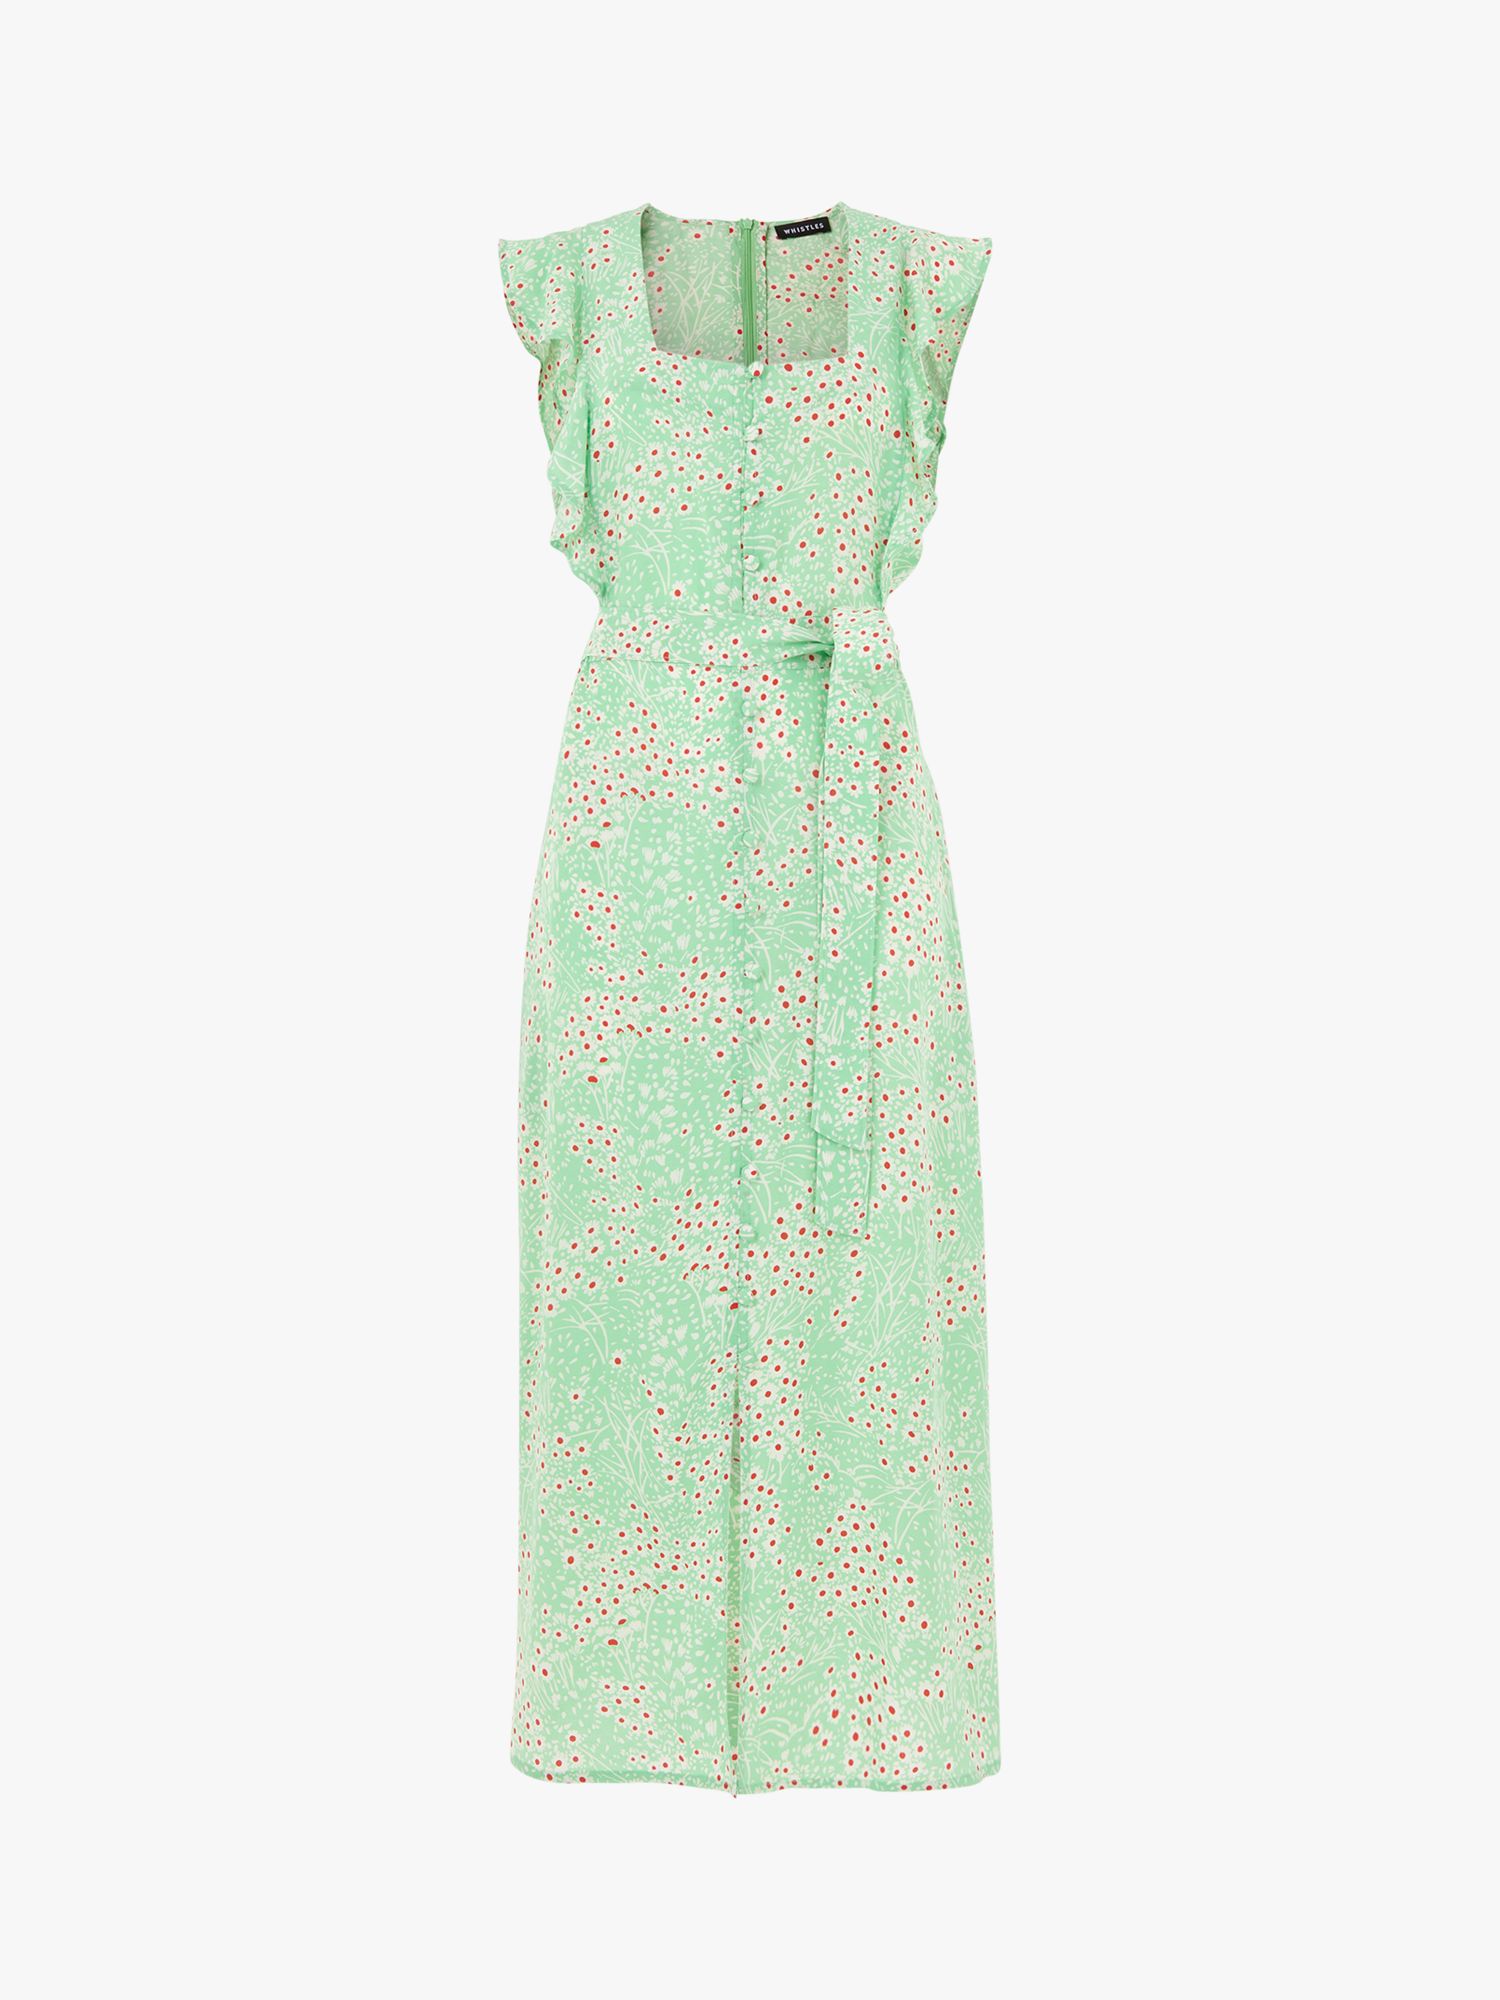 Whistles Sophie Daisy Meadow Print Midi Dress, Green/Multi, 6